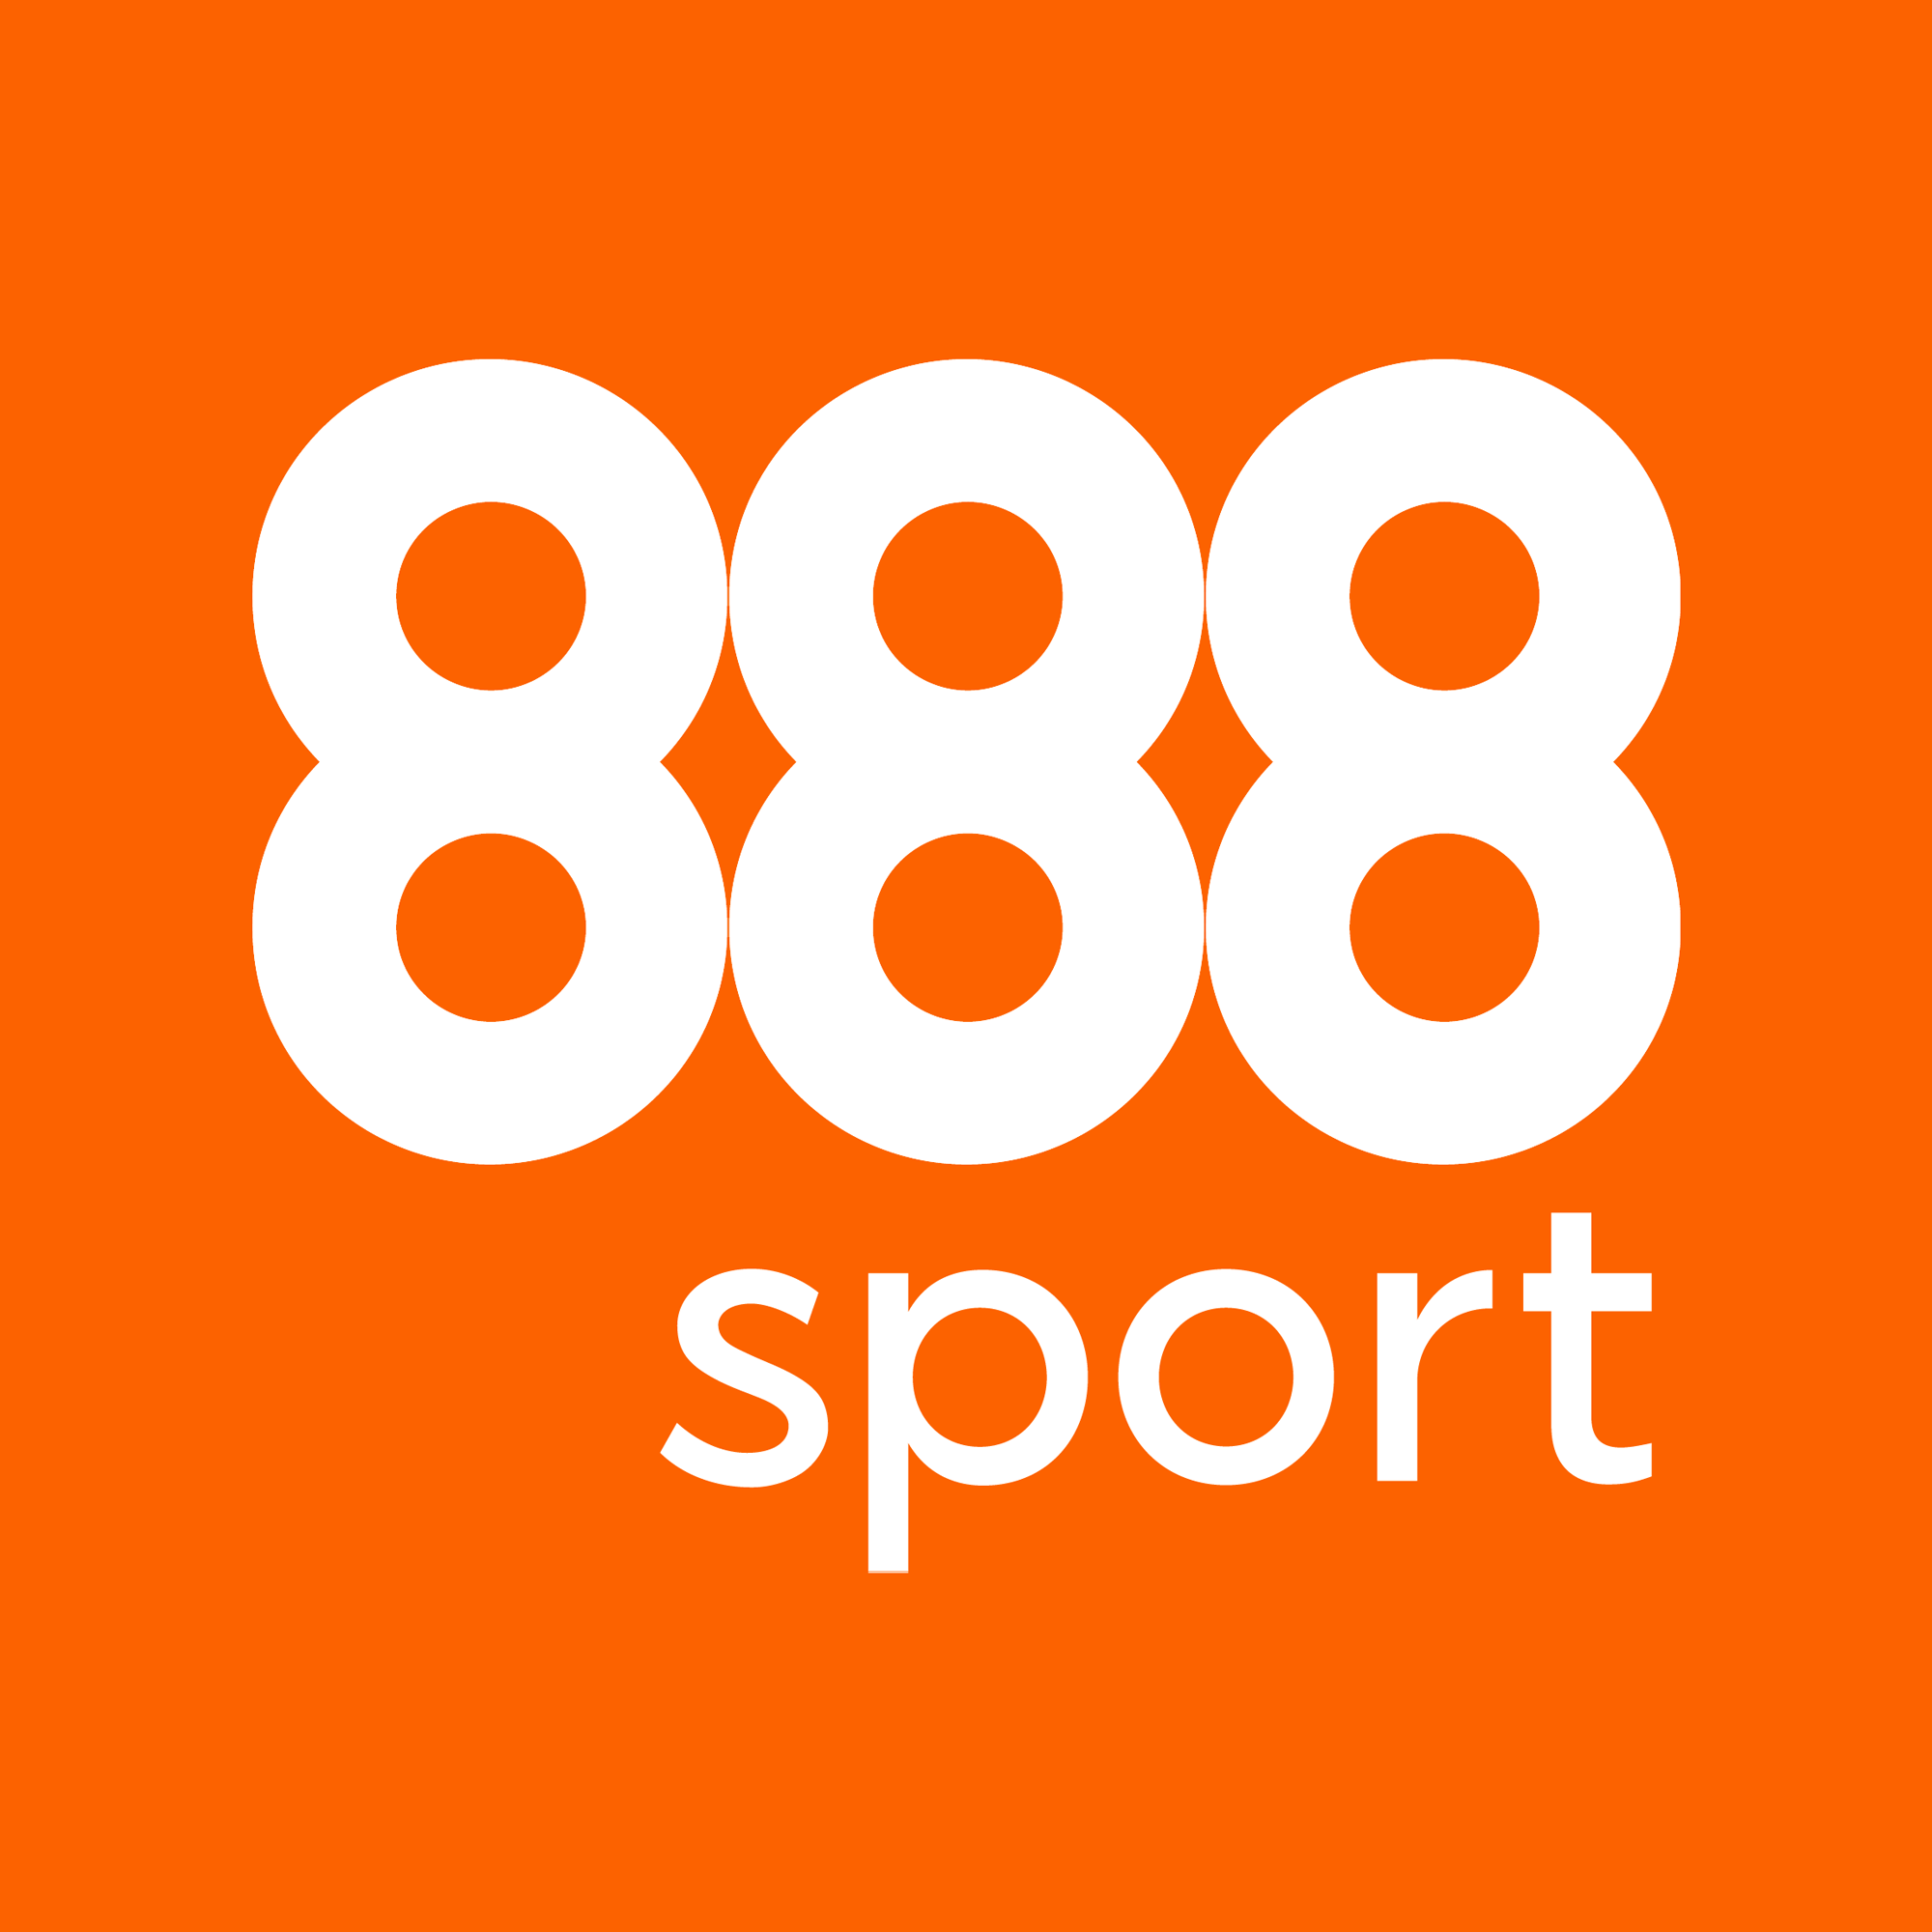 888sport logo